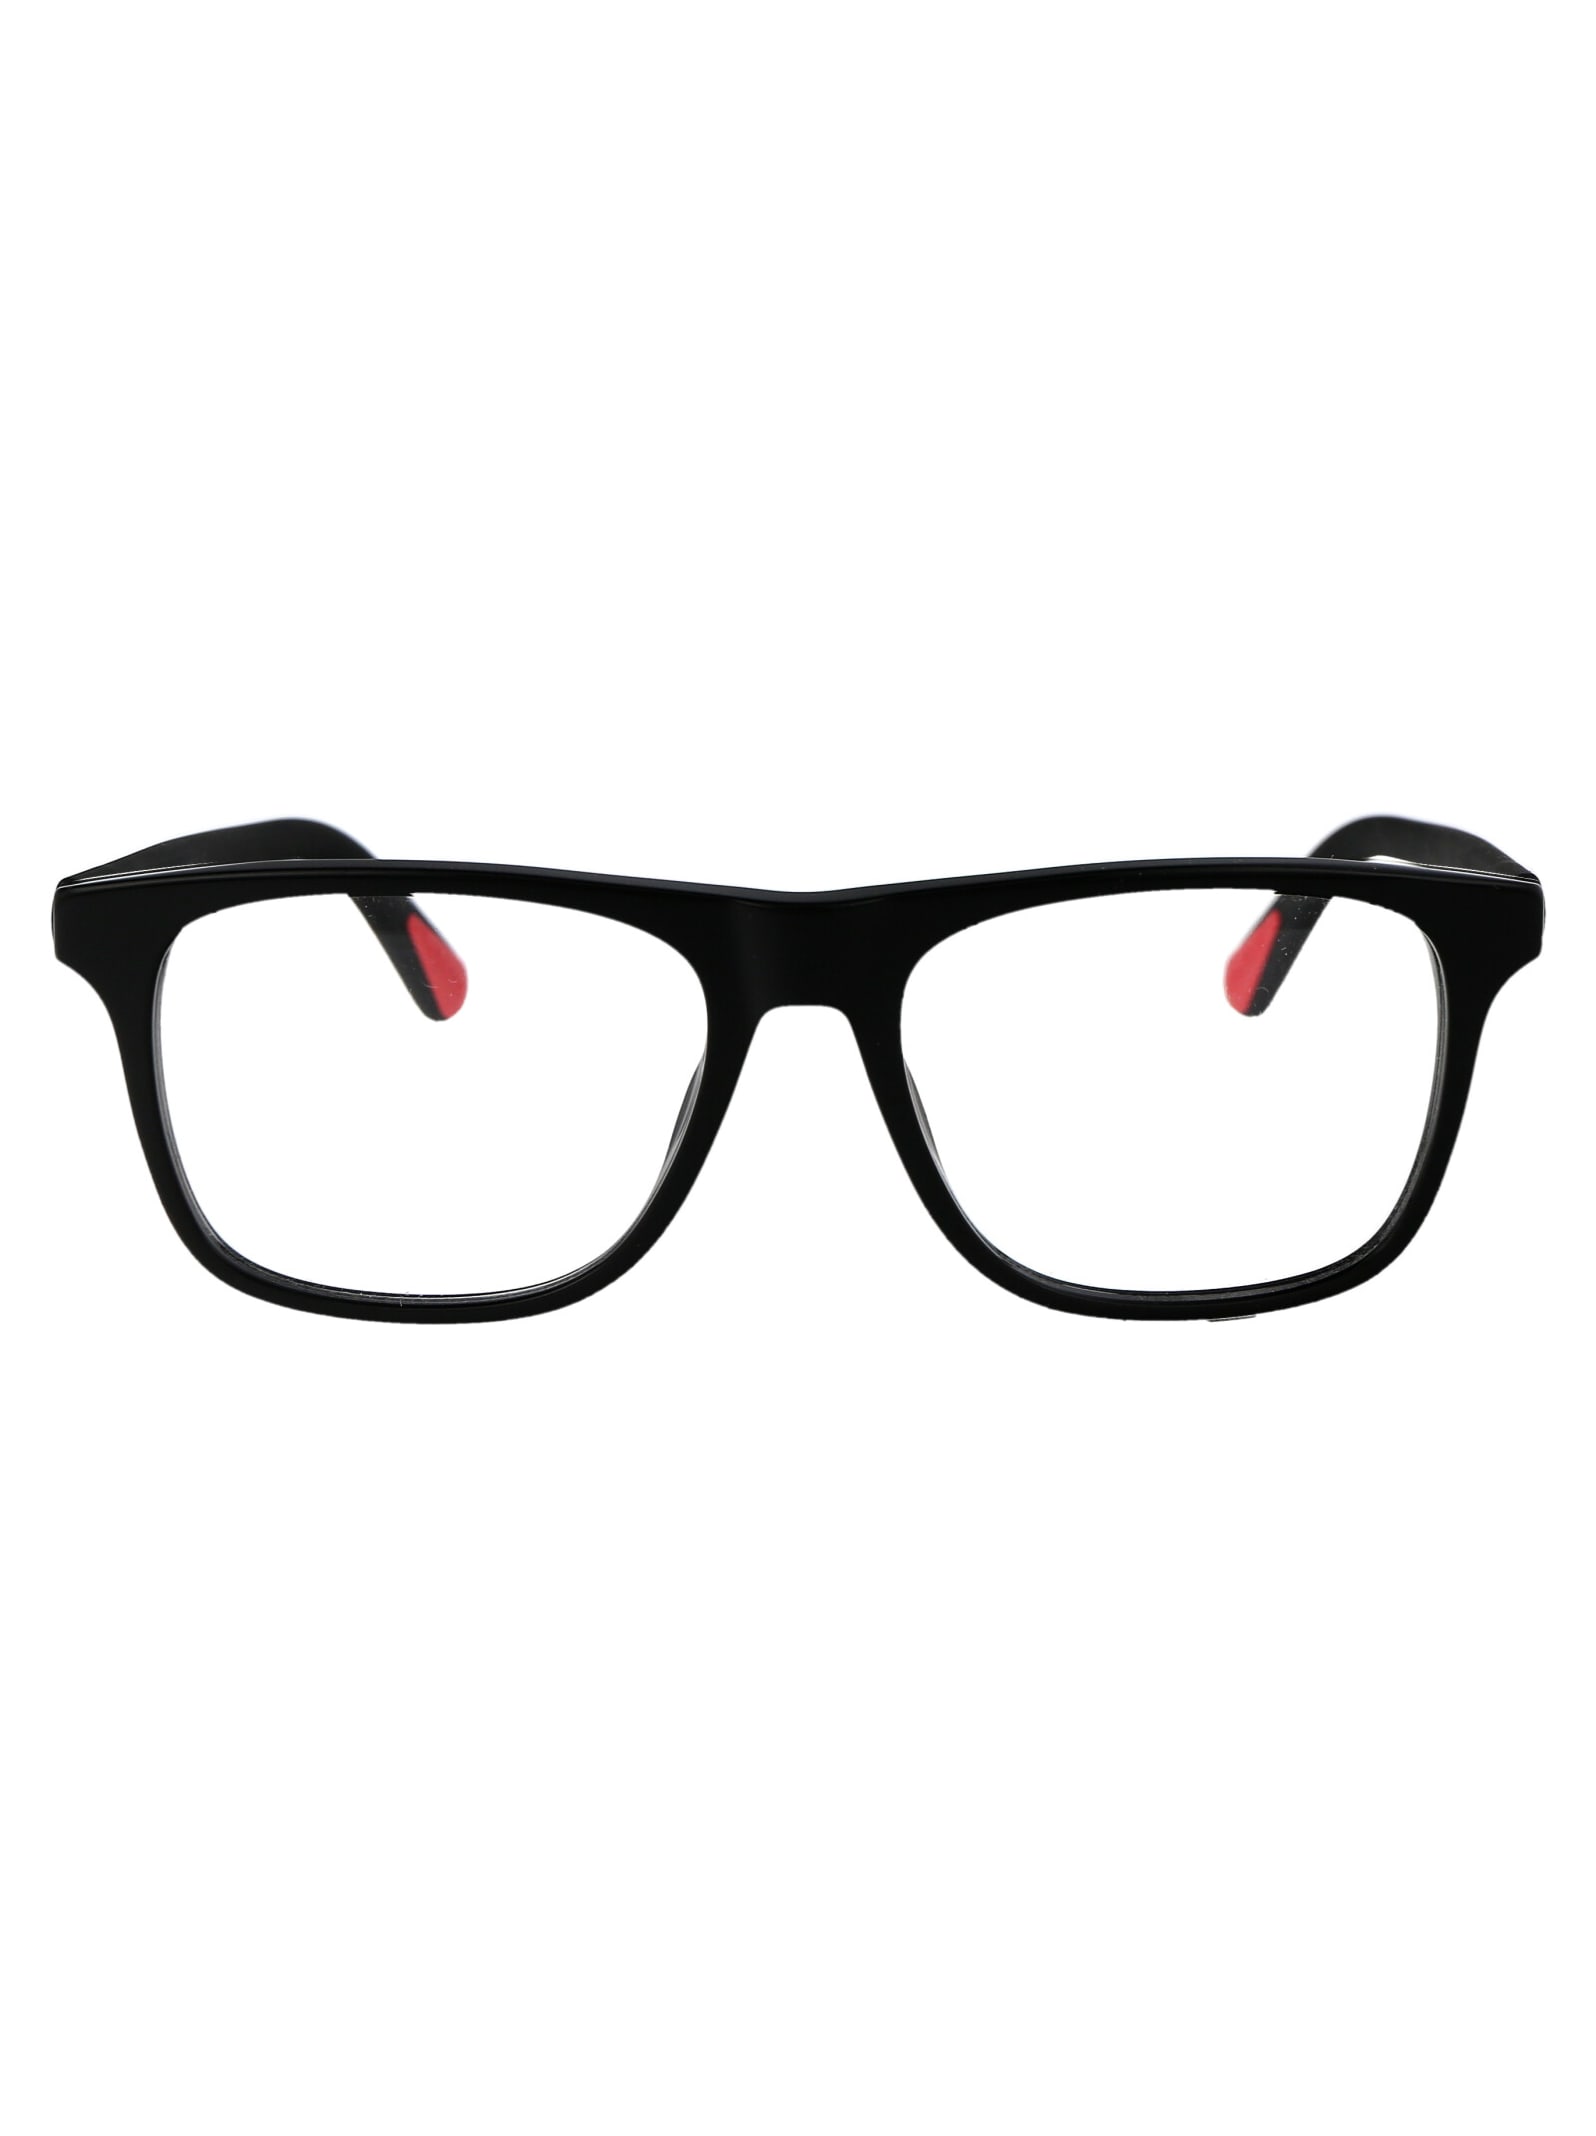 Ml5161 Glasses